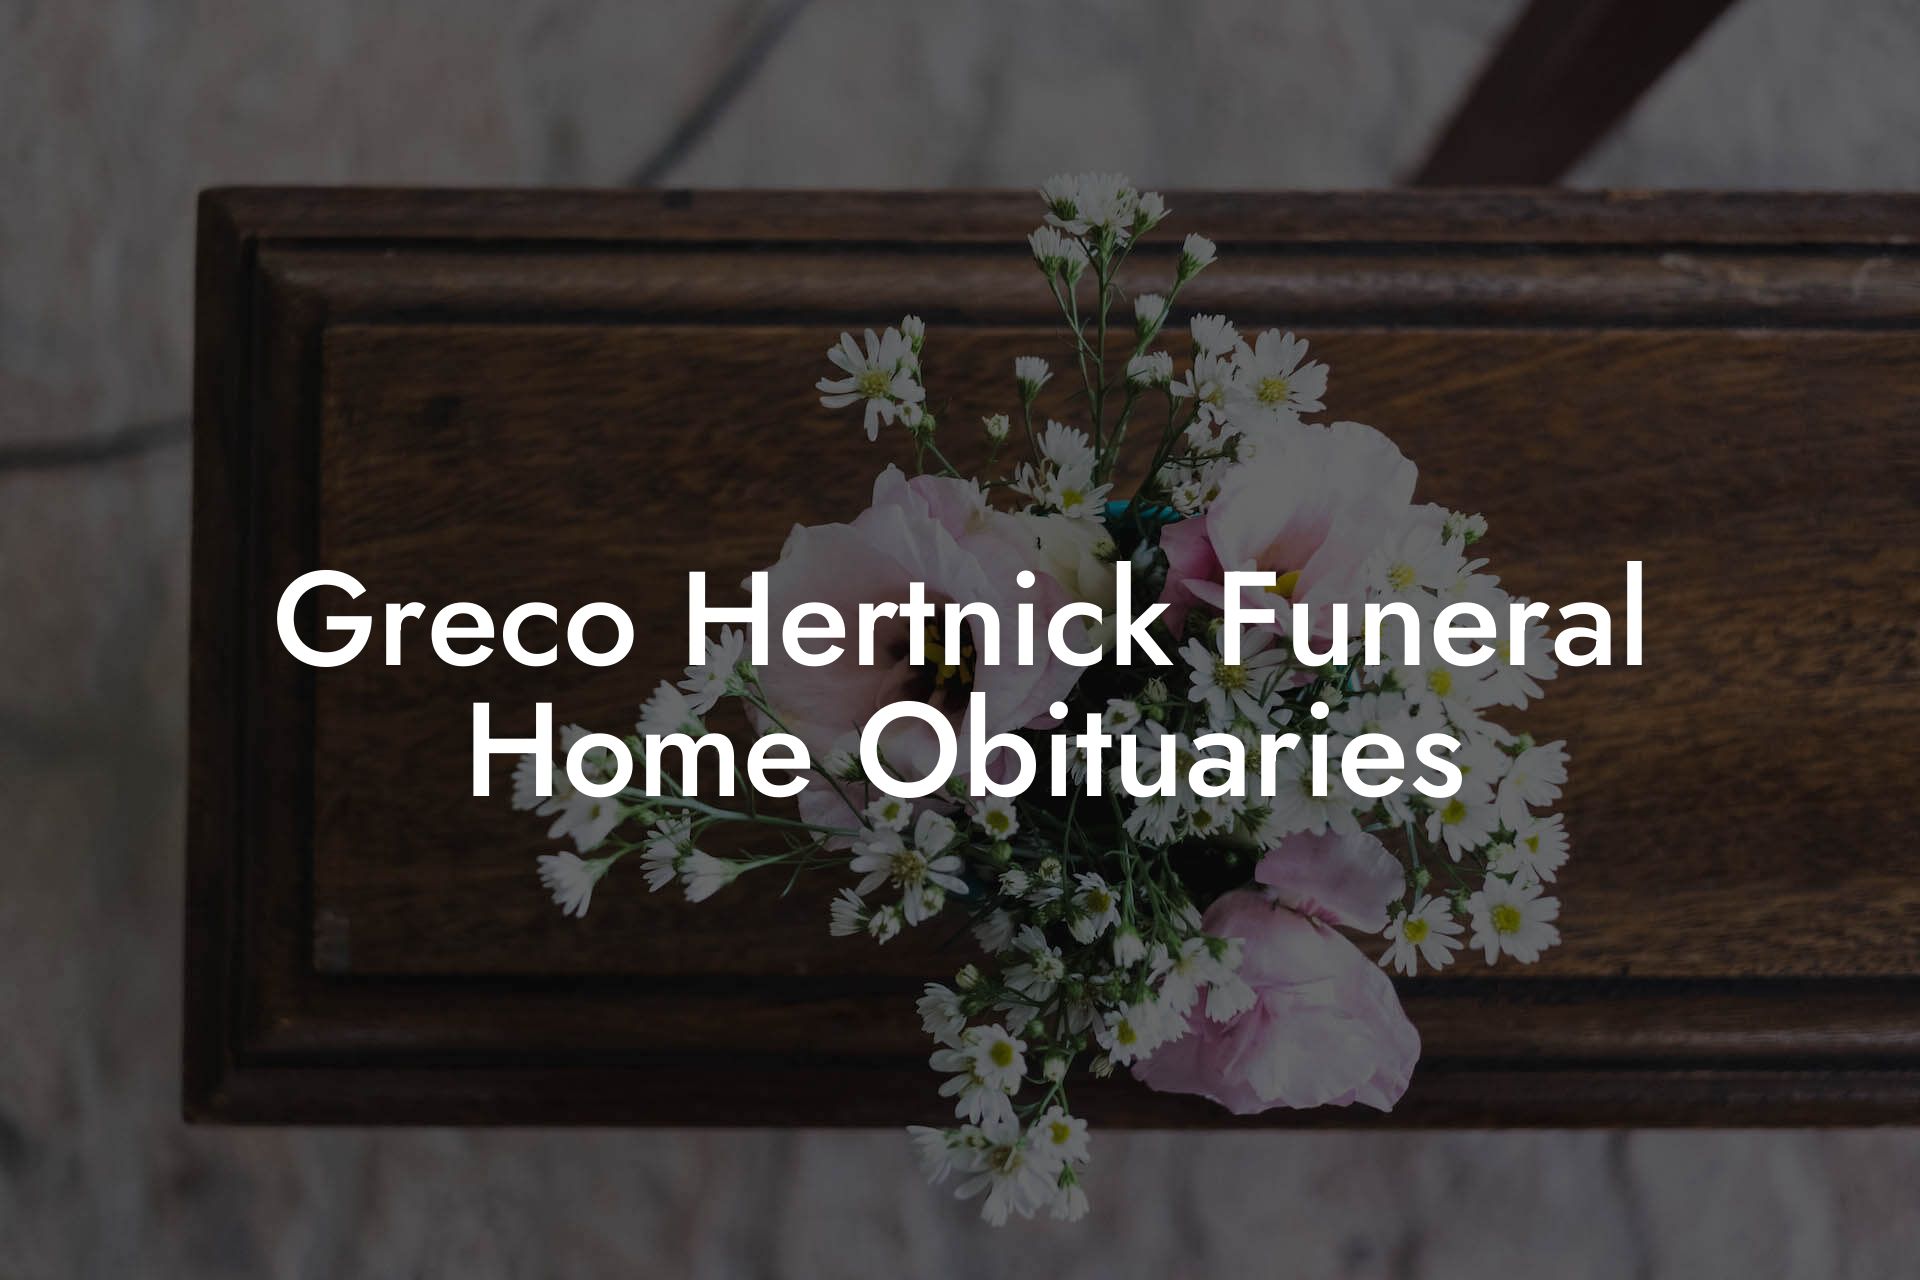 Greco Hertnick Funeral Home Obituaries